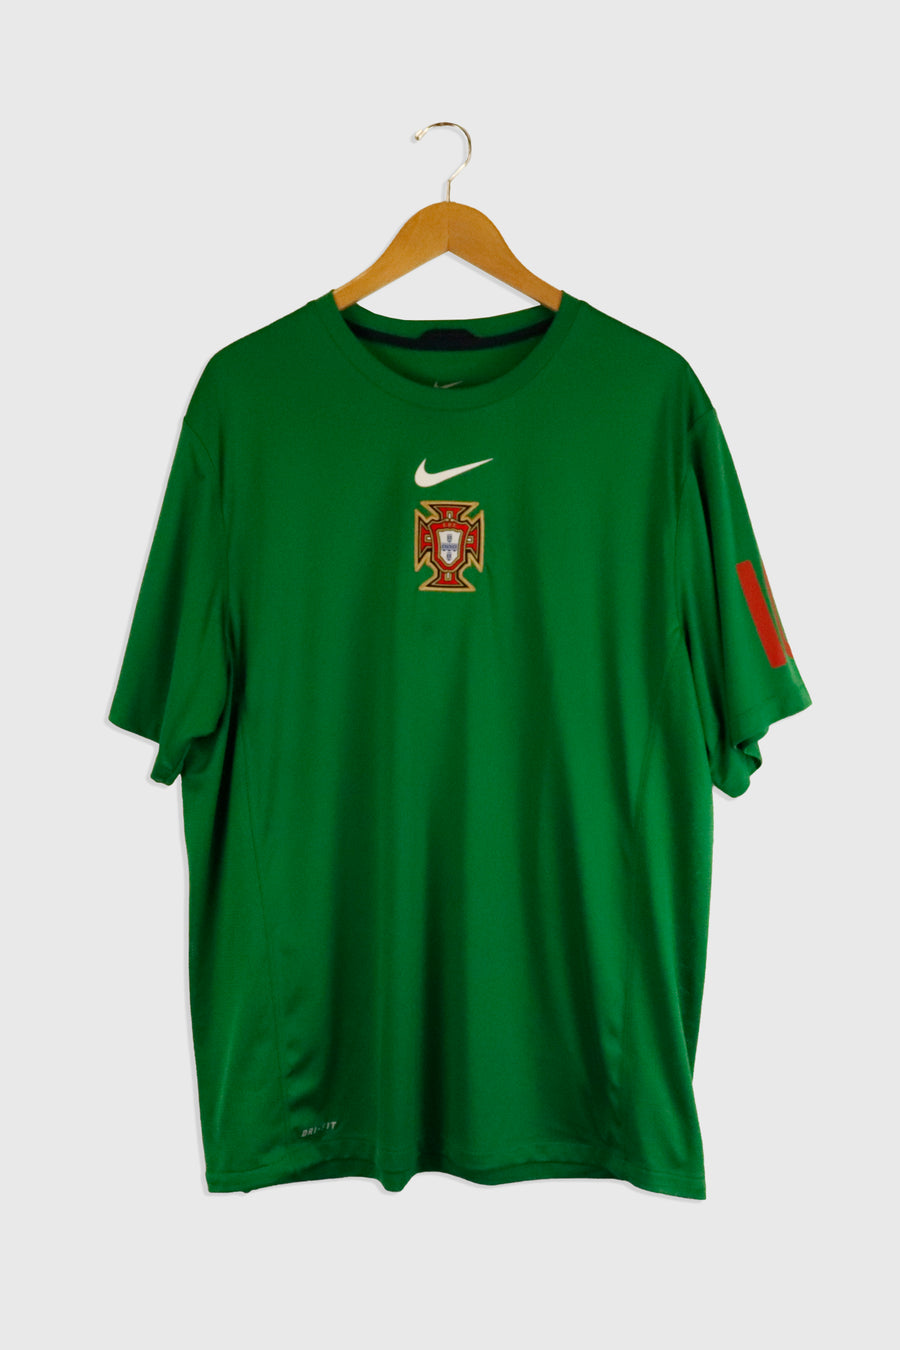 Vintage Nike Dri-Fit Portugal Jersey Sz 2XL